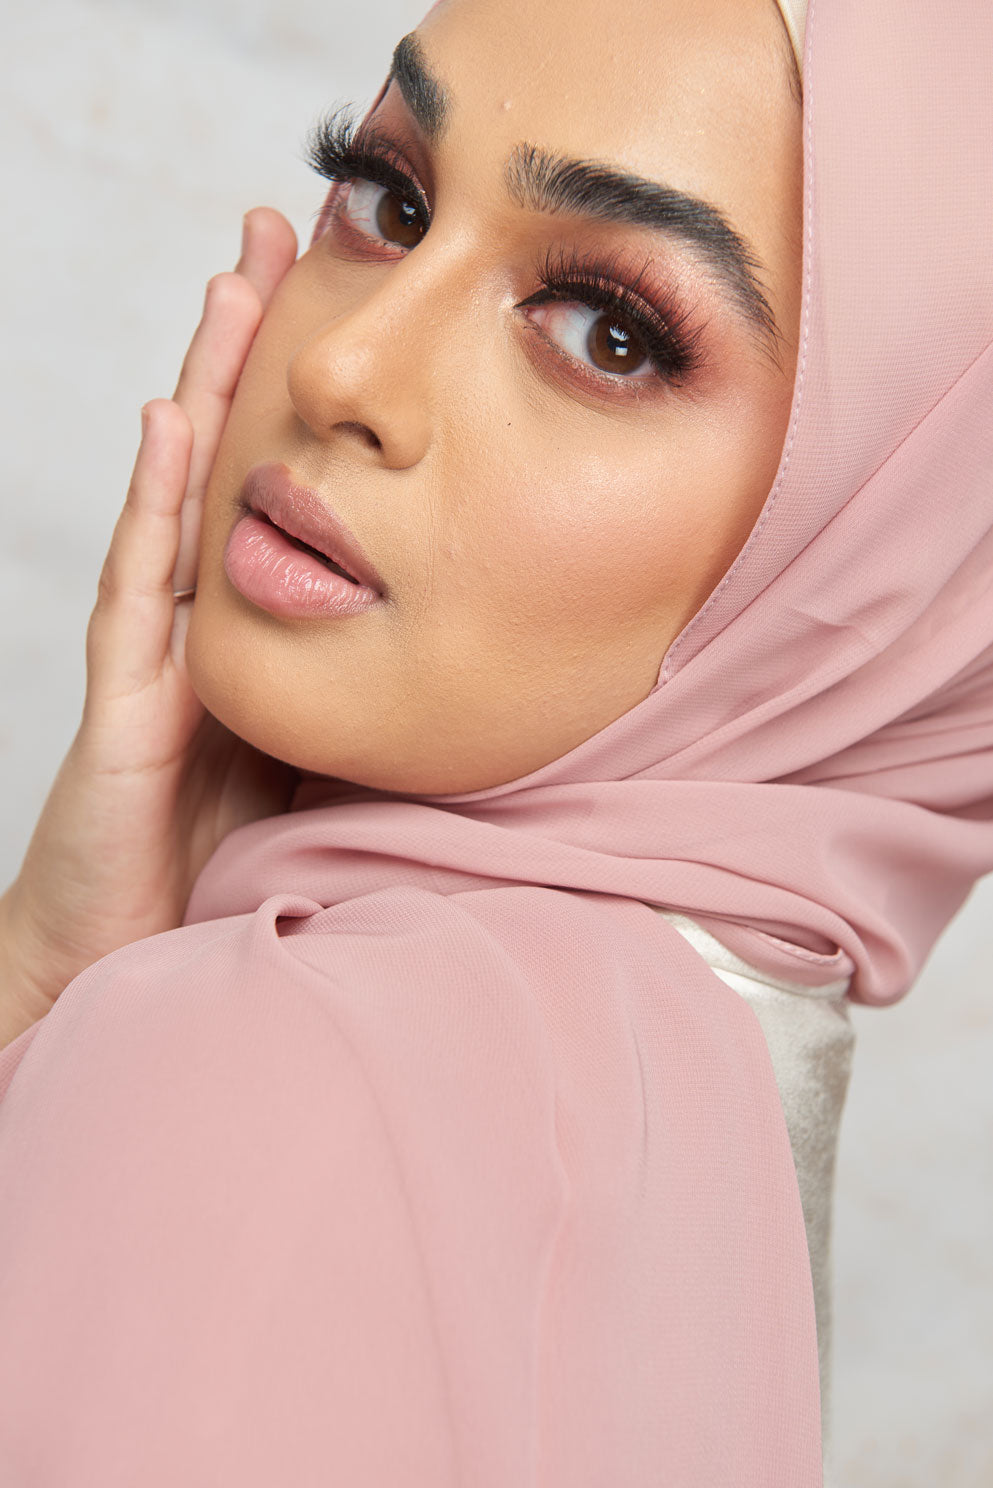 Pink Nevada Premium Chiffon Hijab